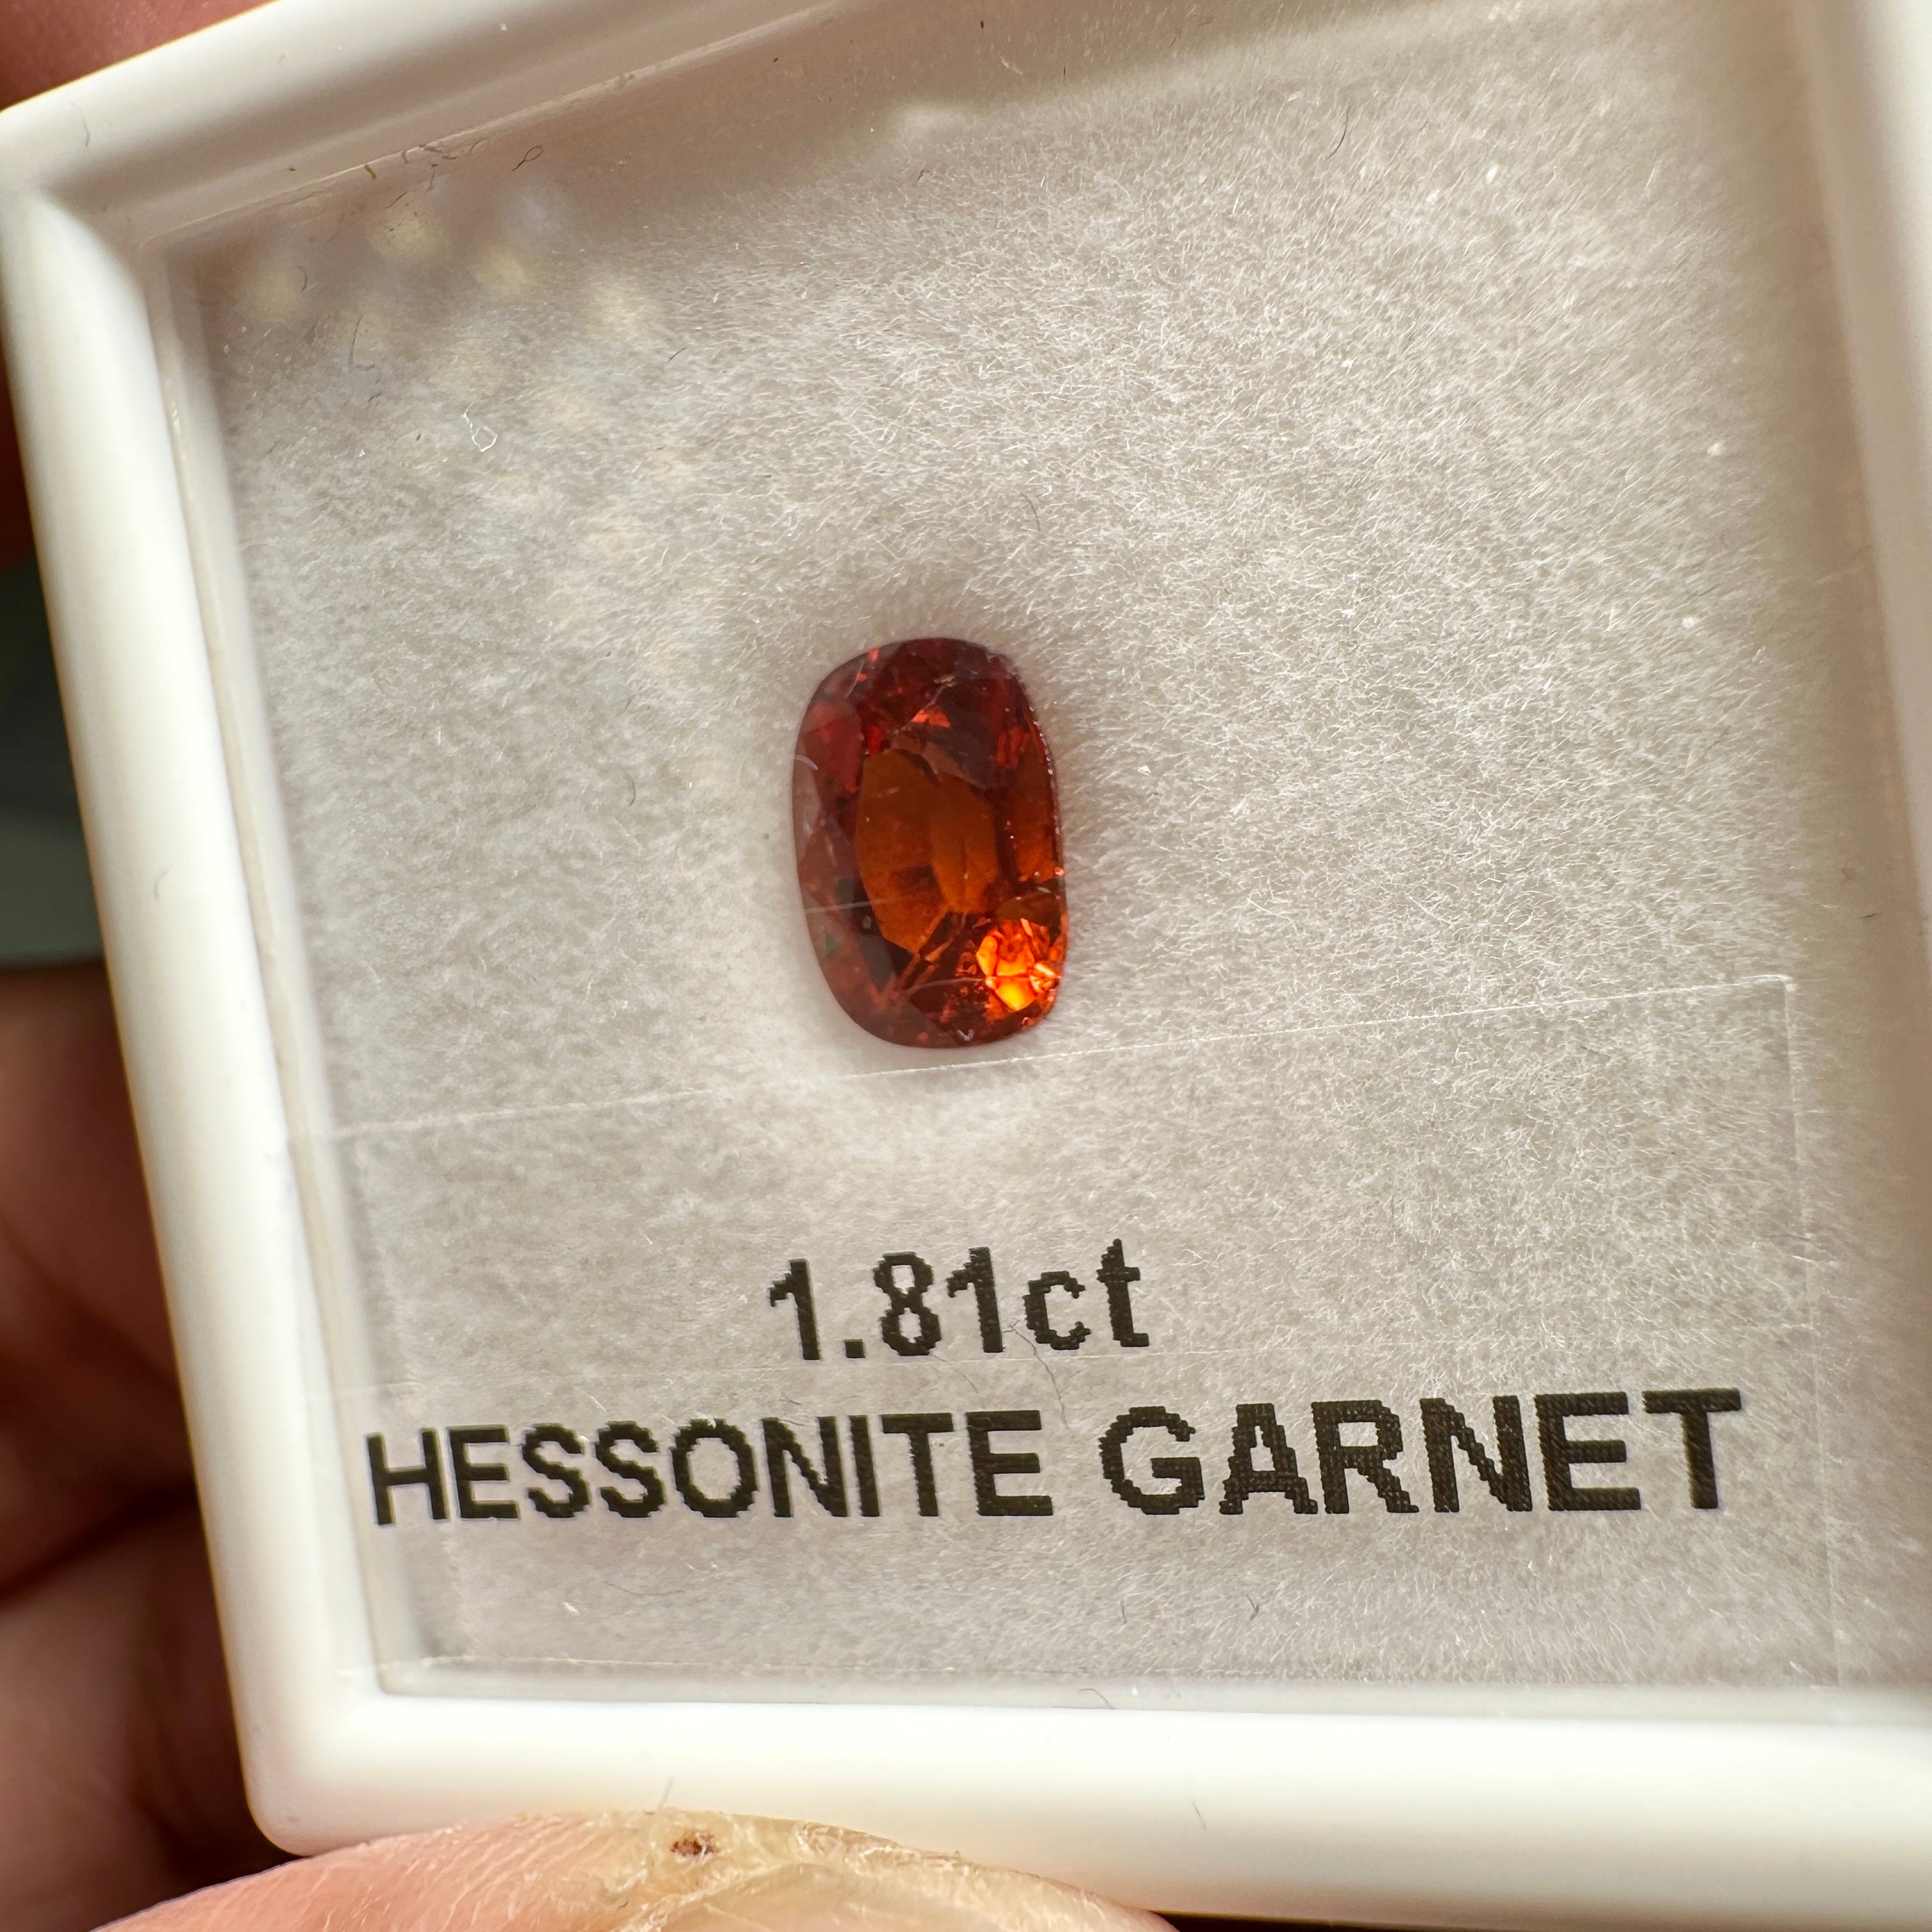 1.81ct Hessonite Garnet, Untreated Unheated, native cut